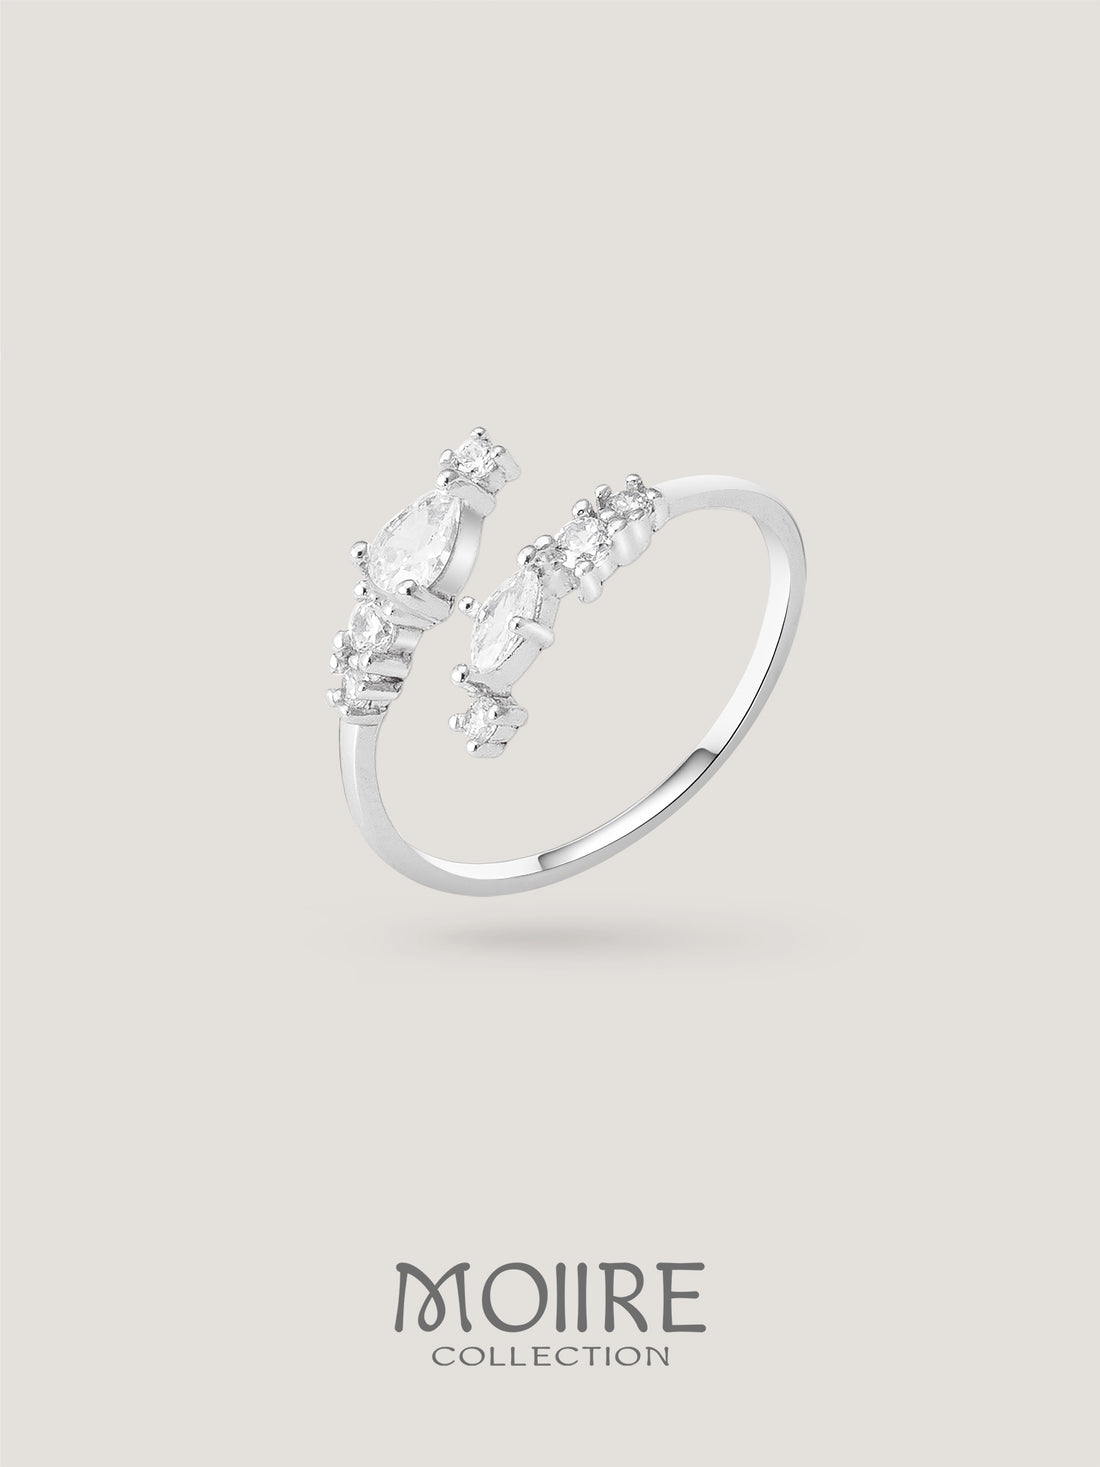 Moiire Jewelry | 淺淺喜